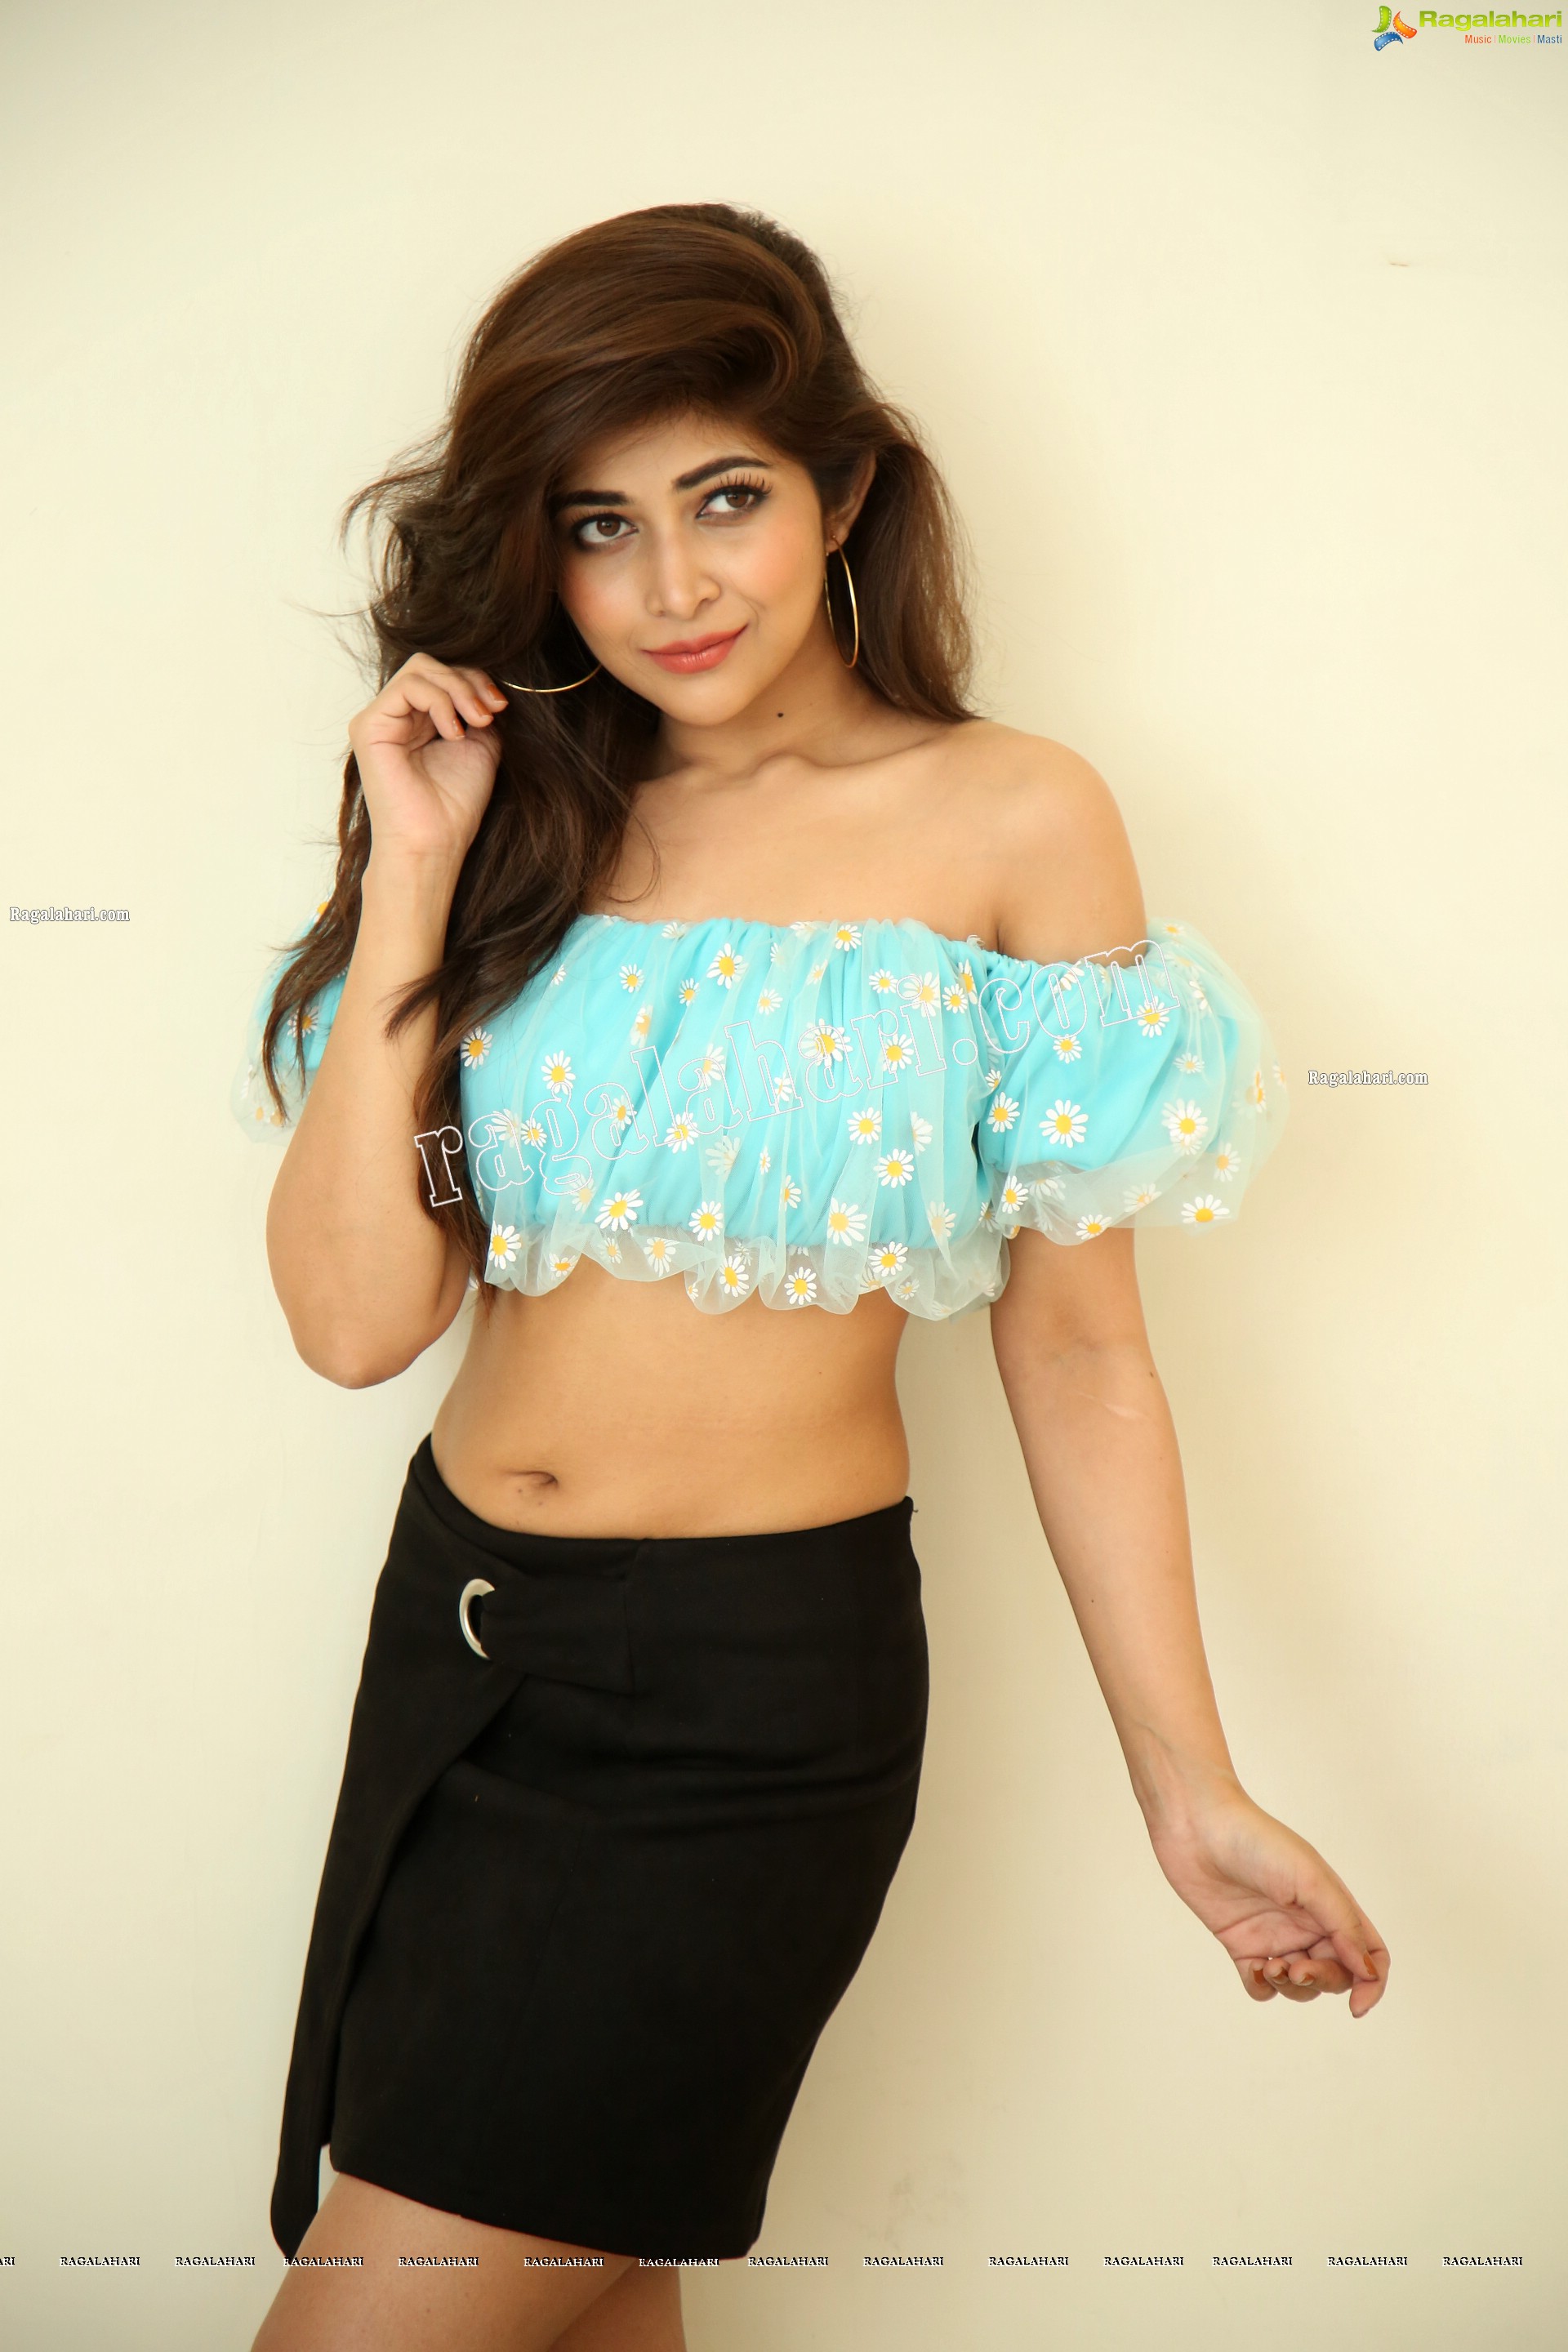 Srijita Gosha in Aqua-Blue Crop Top and Black Mini Skirt, Exclusive Photo Shoot